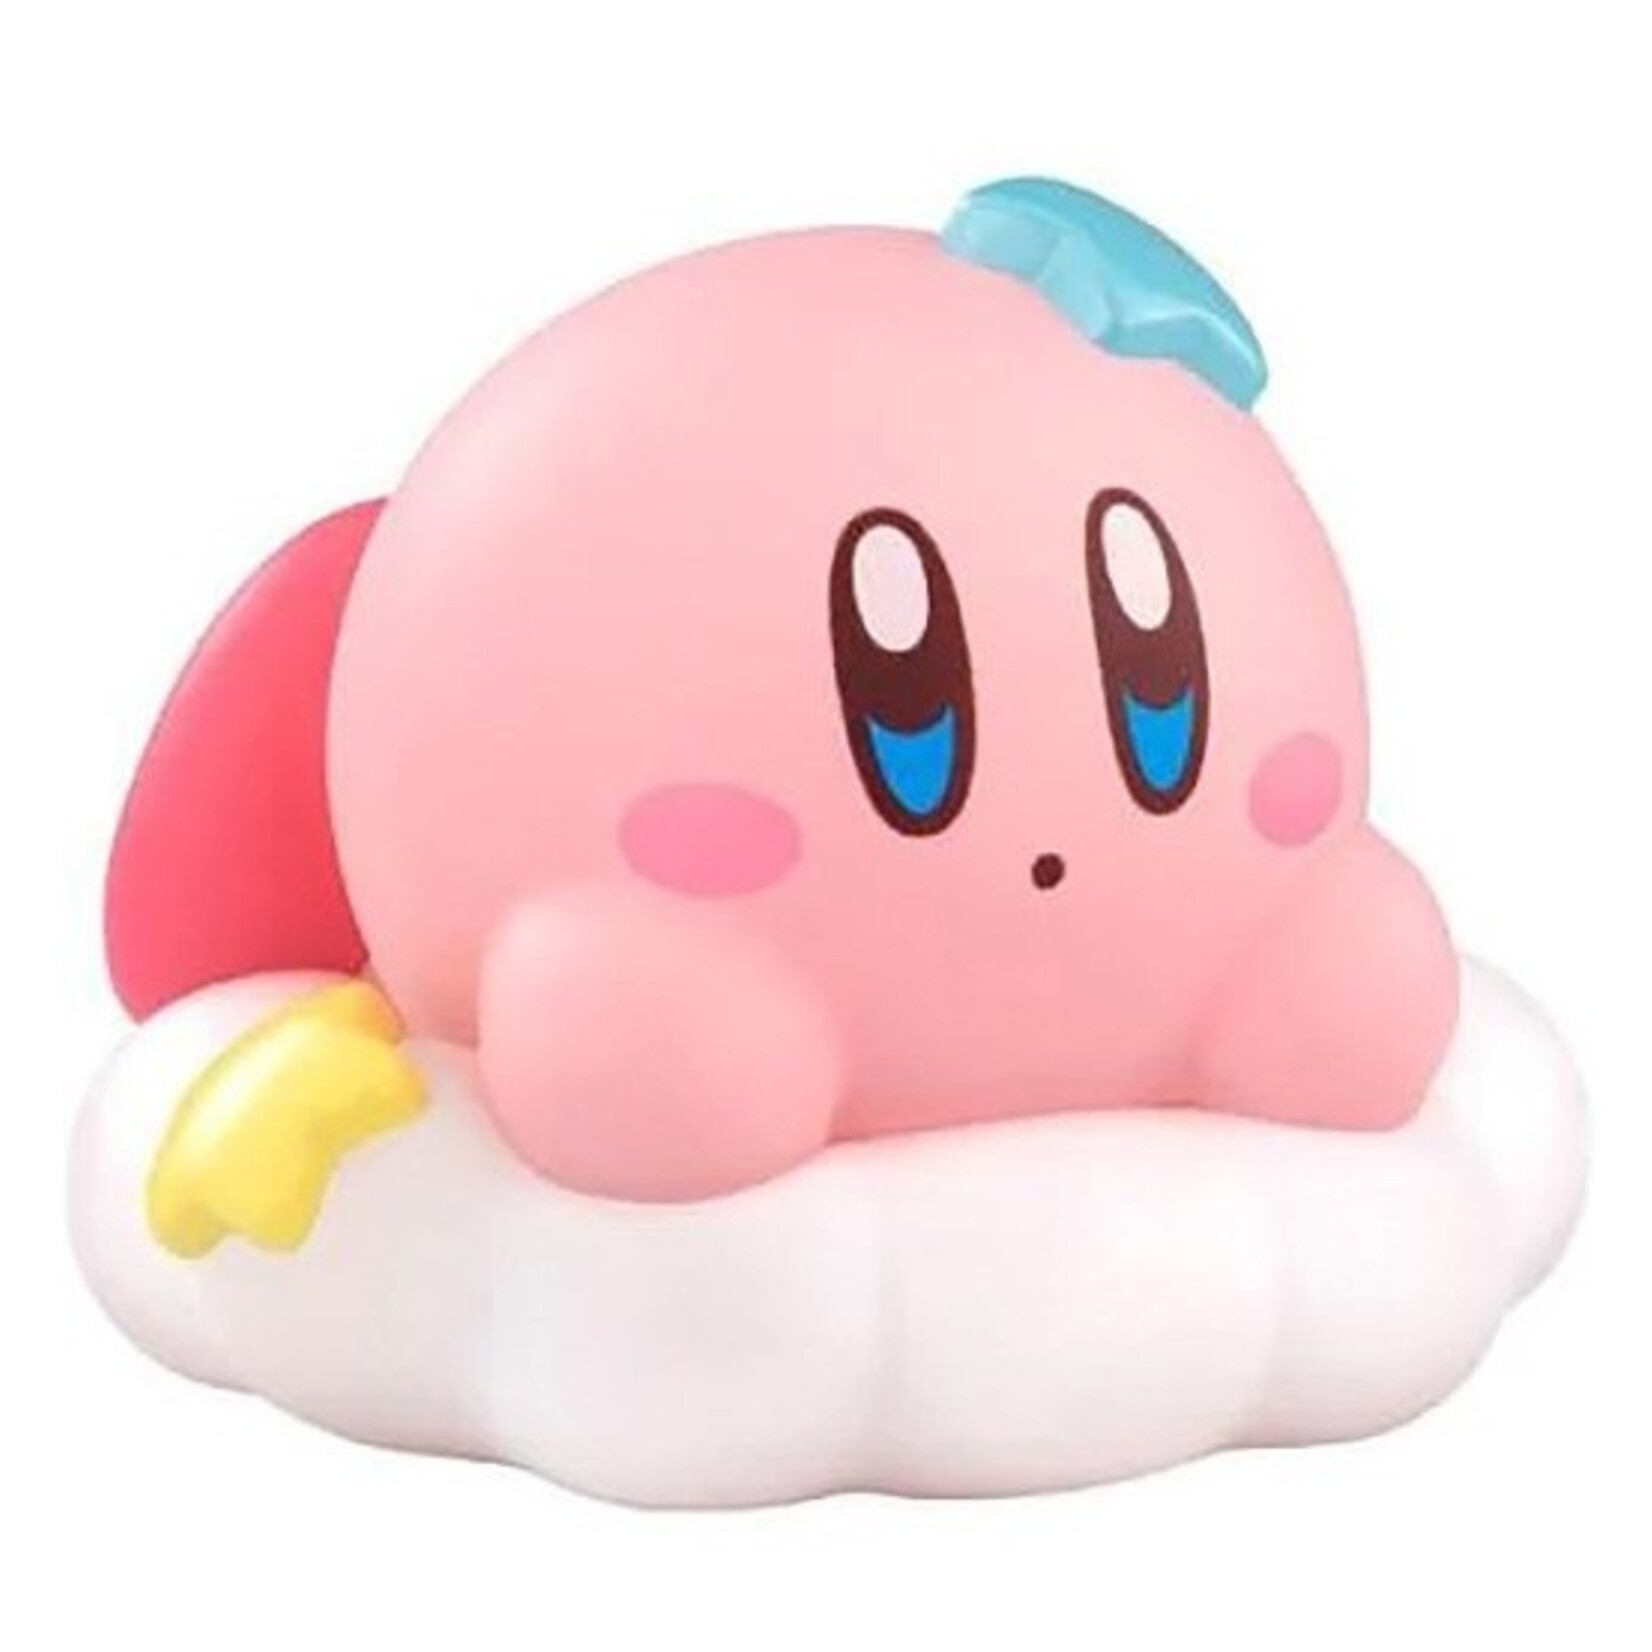 Bandai Kirby Figuur Cloud Ride